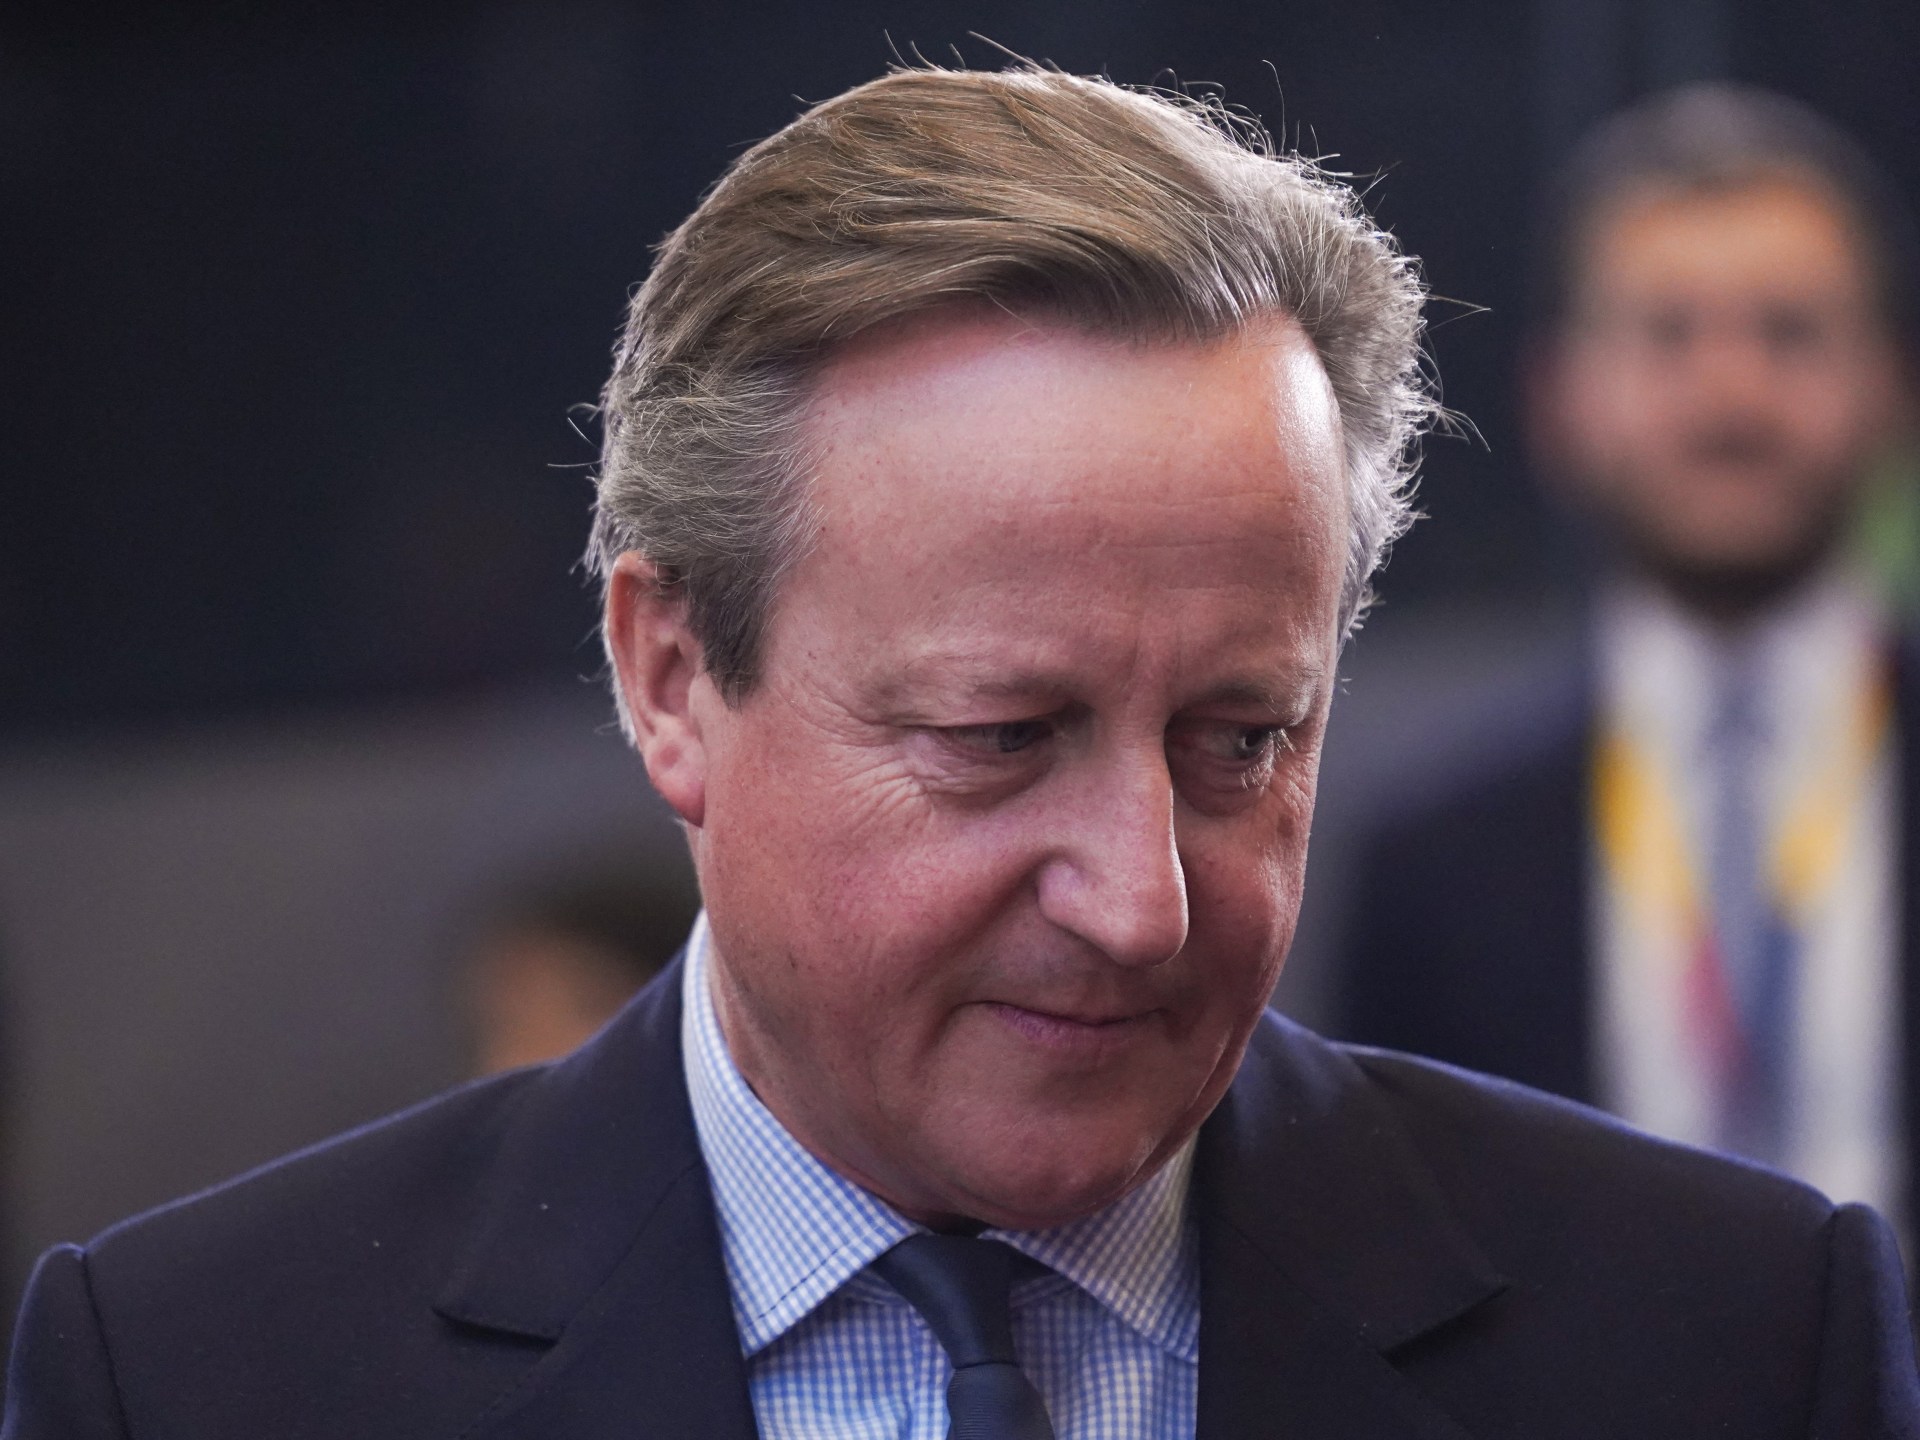 UK’s David Cameron scolds Scottish leader Humza Yousaf over Erdogan meeting | Gaza News #UKs #David #Cameron #scolds #Scottish #leader #Humza #Yousaf #Erdogan #meeting #Gaza #News